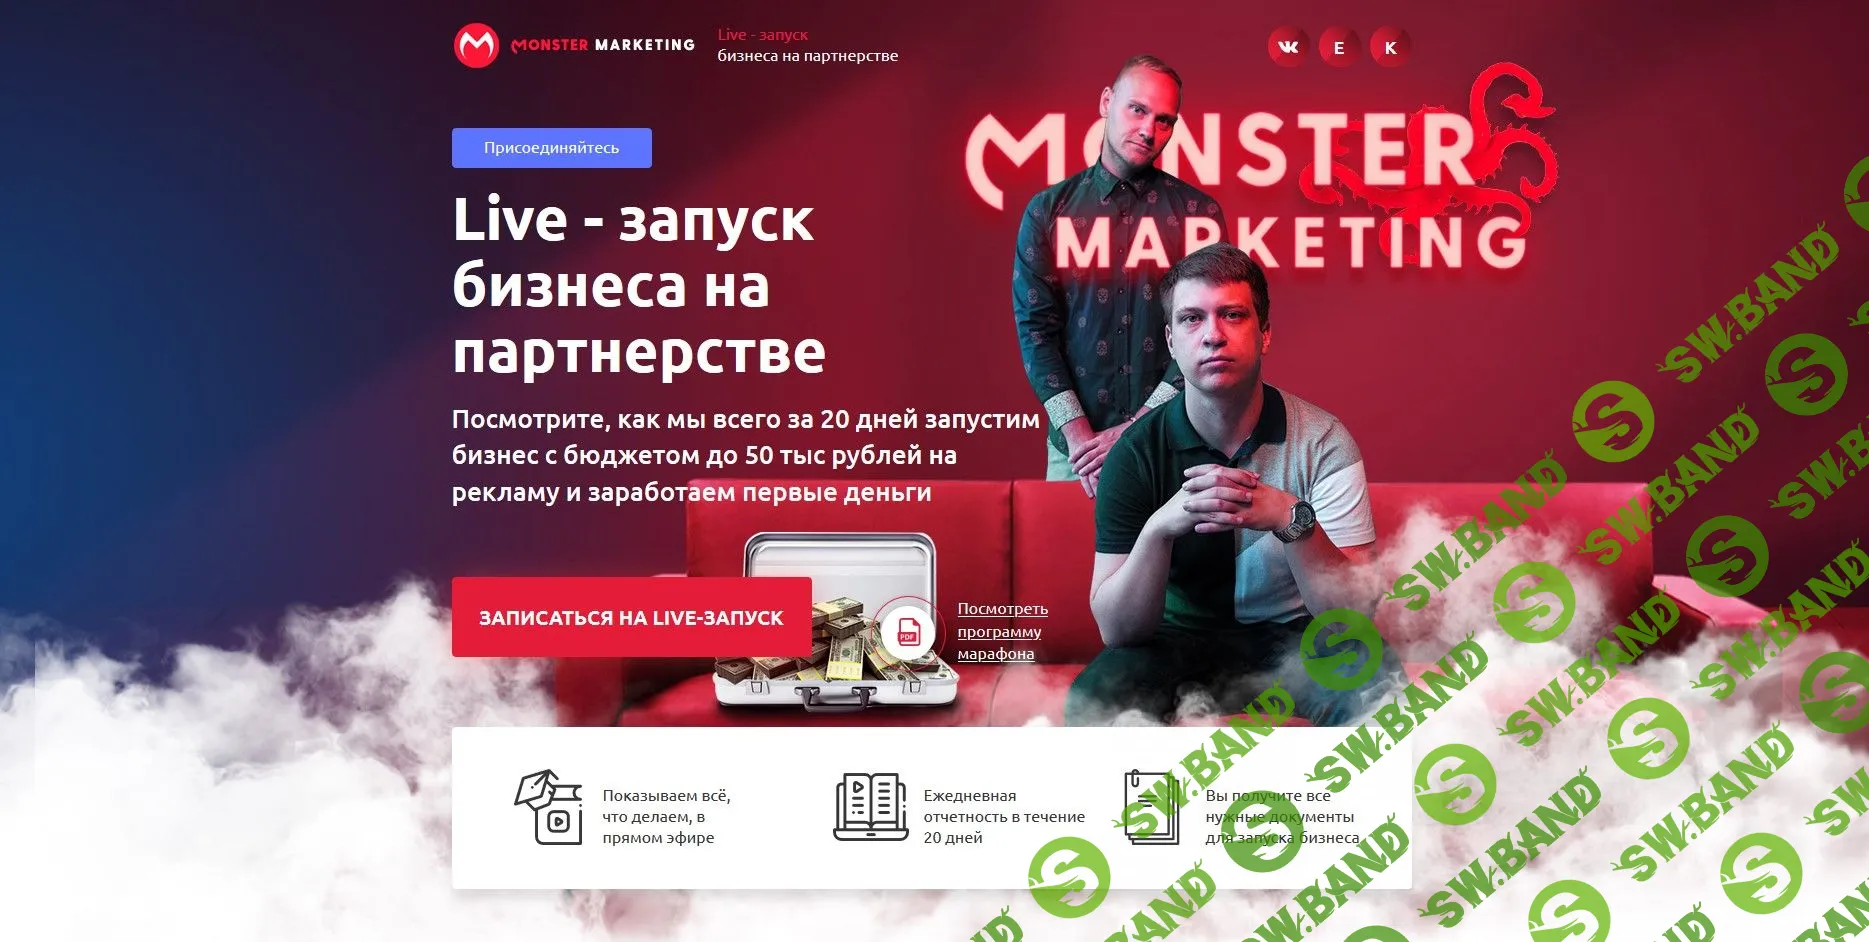 [Monster Marketing] Live - запуск бизнеса на партнерстве. Выжимка курса (2019)